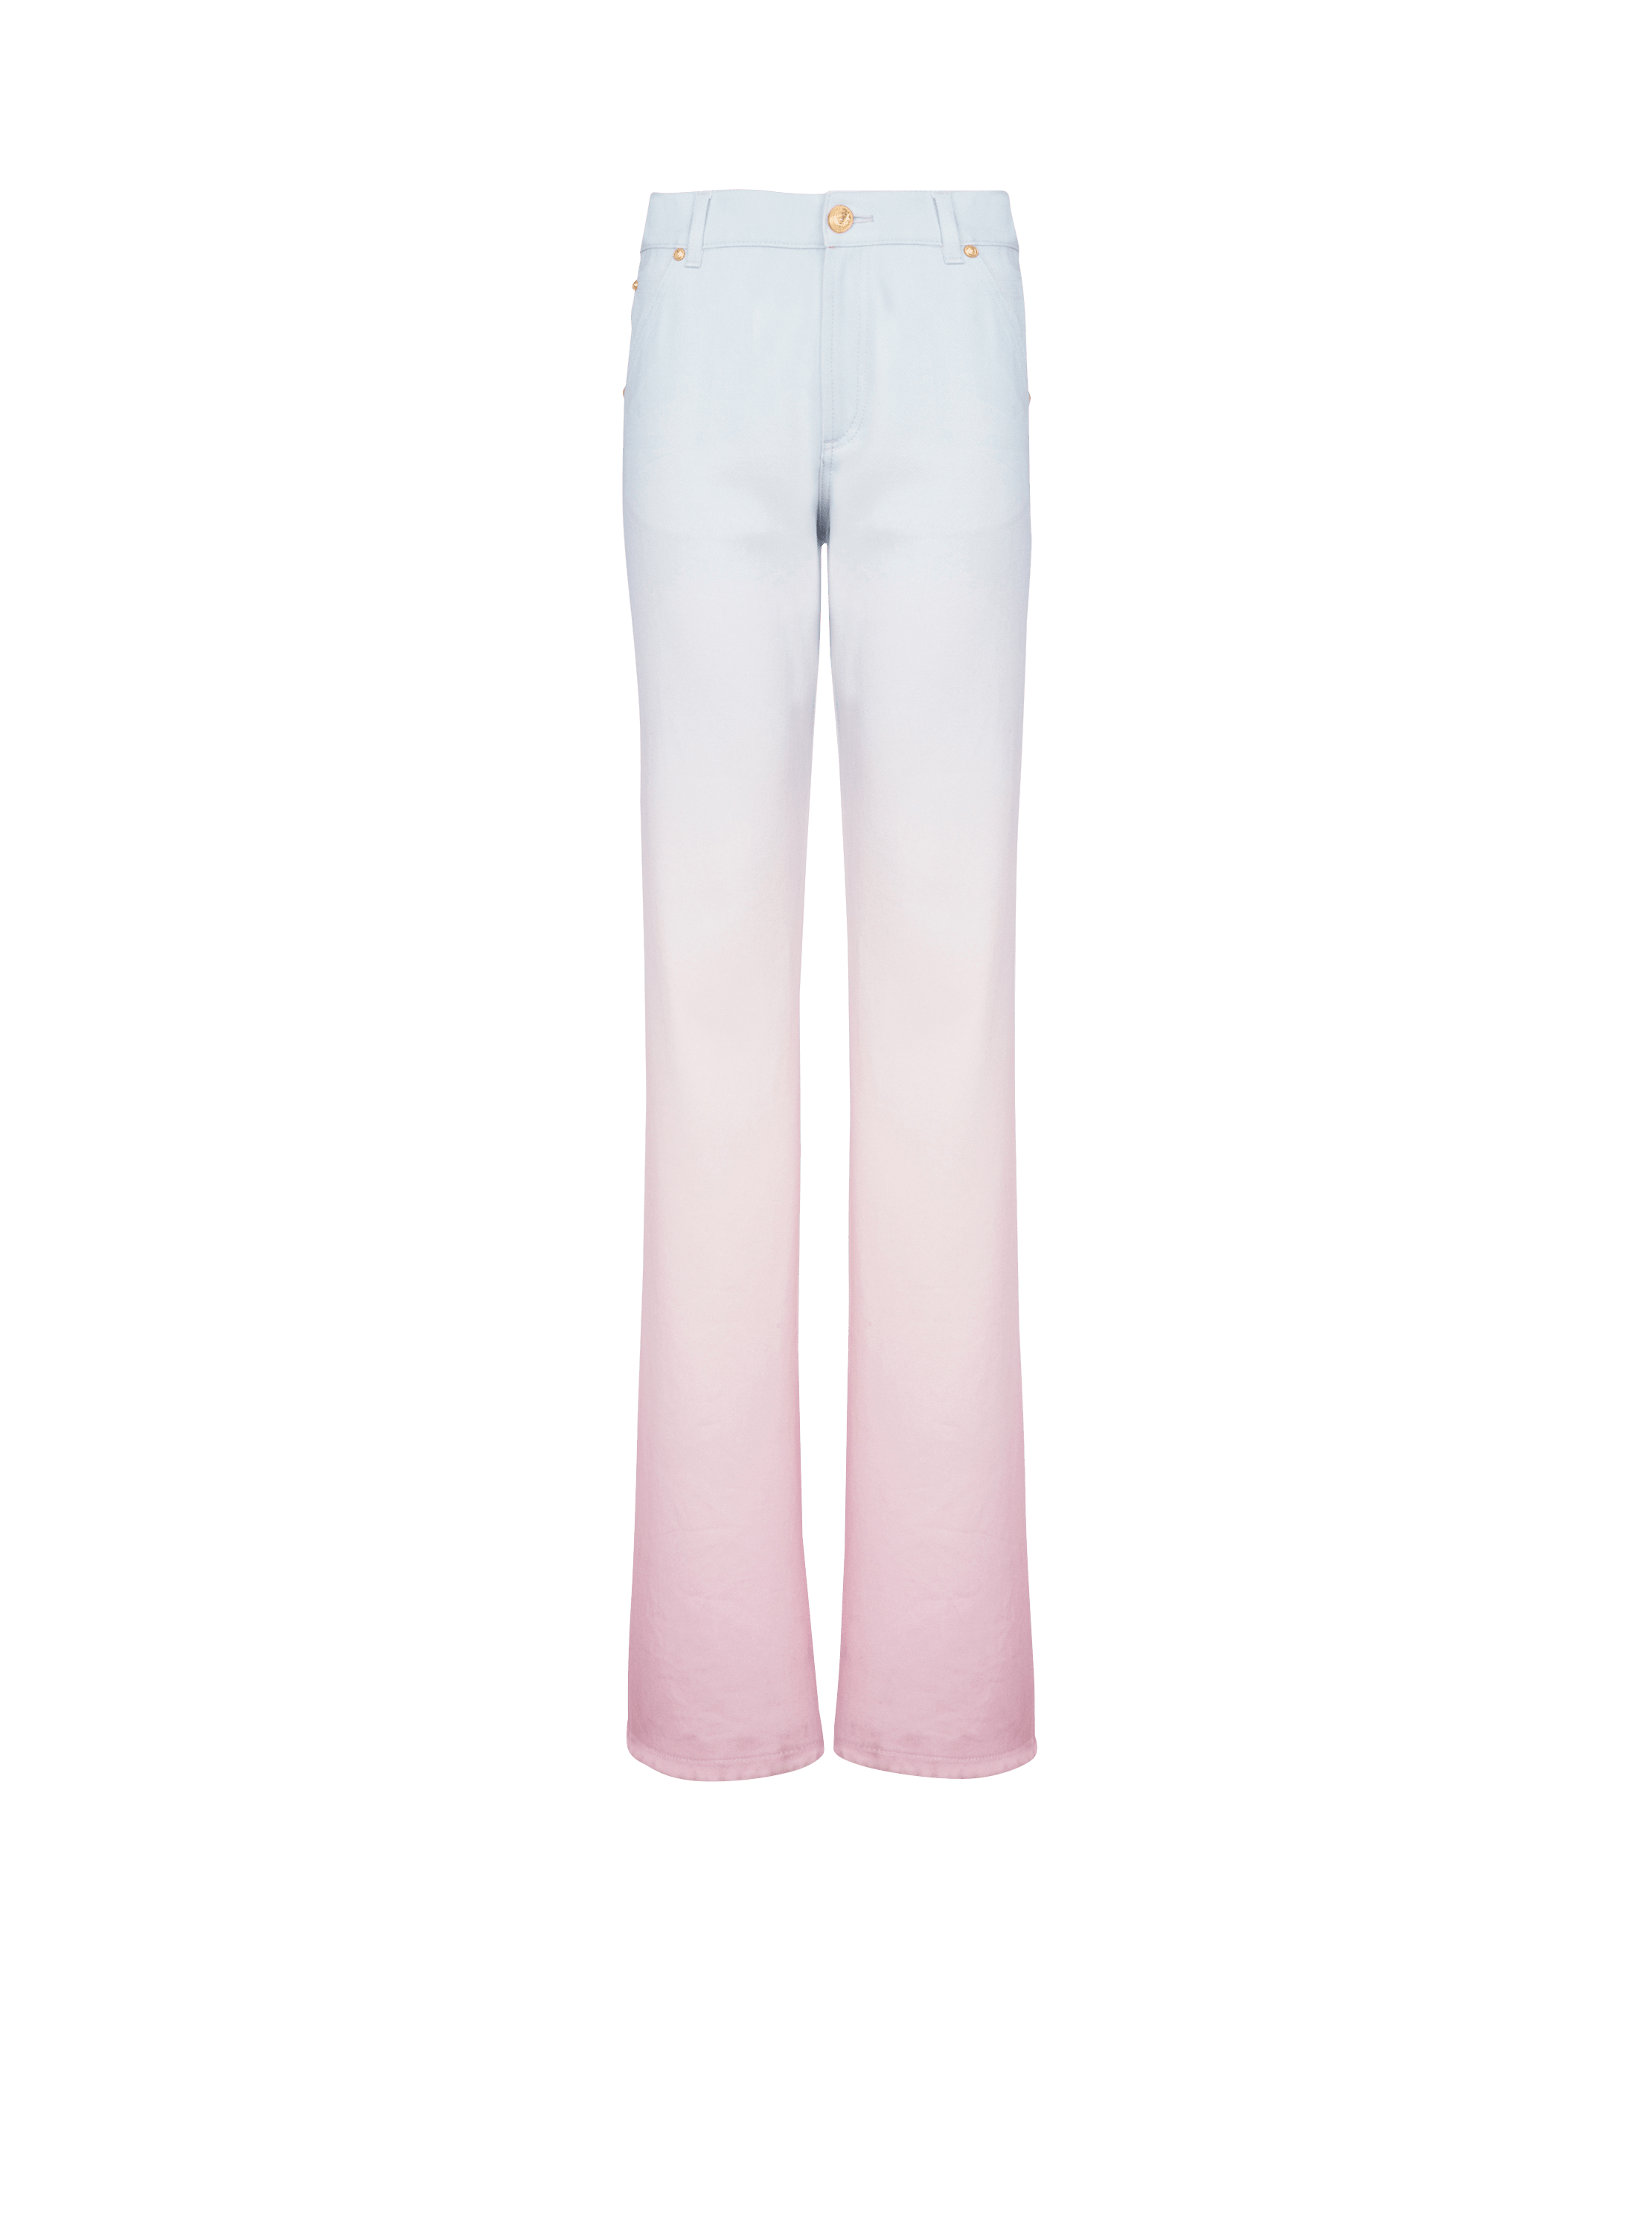 Balmain x Evian - Weite Jeans 